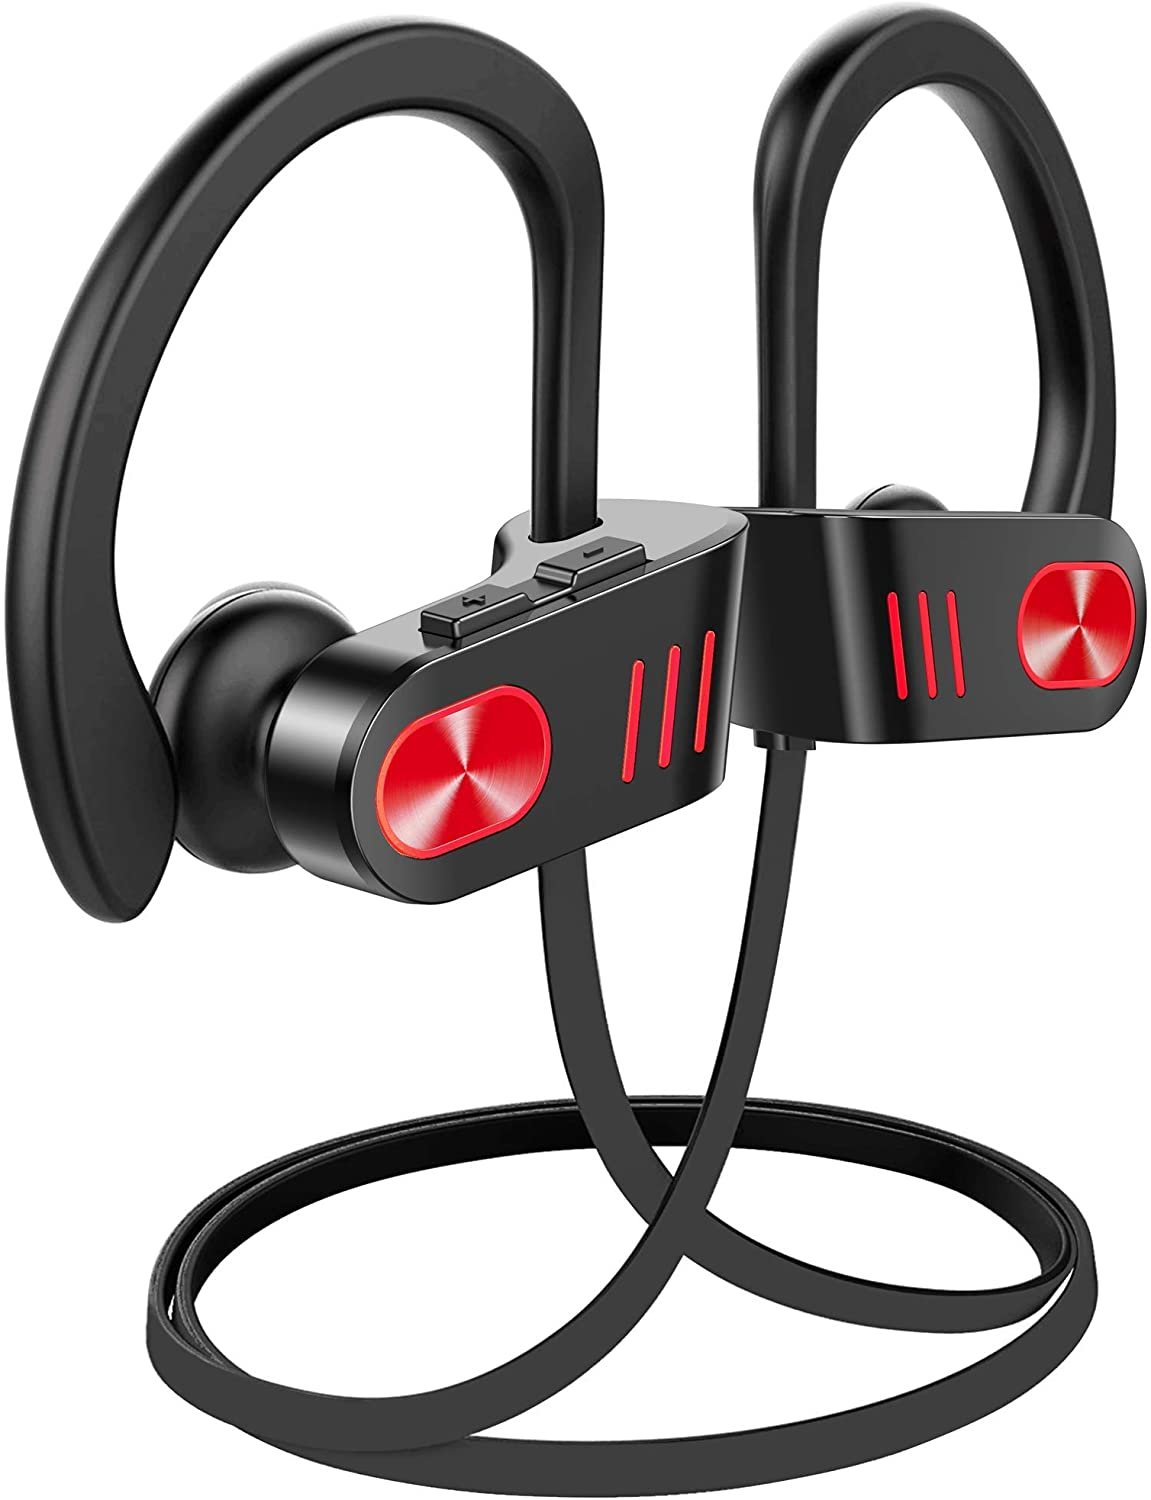 Wireless Headphones, Bluetooth Headphones,Sports Earbuds, IPX7 Waterproof Stereo